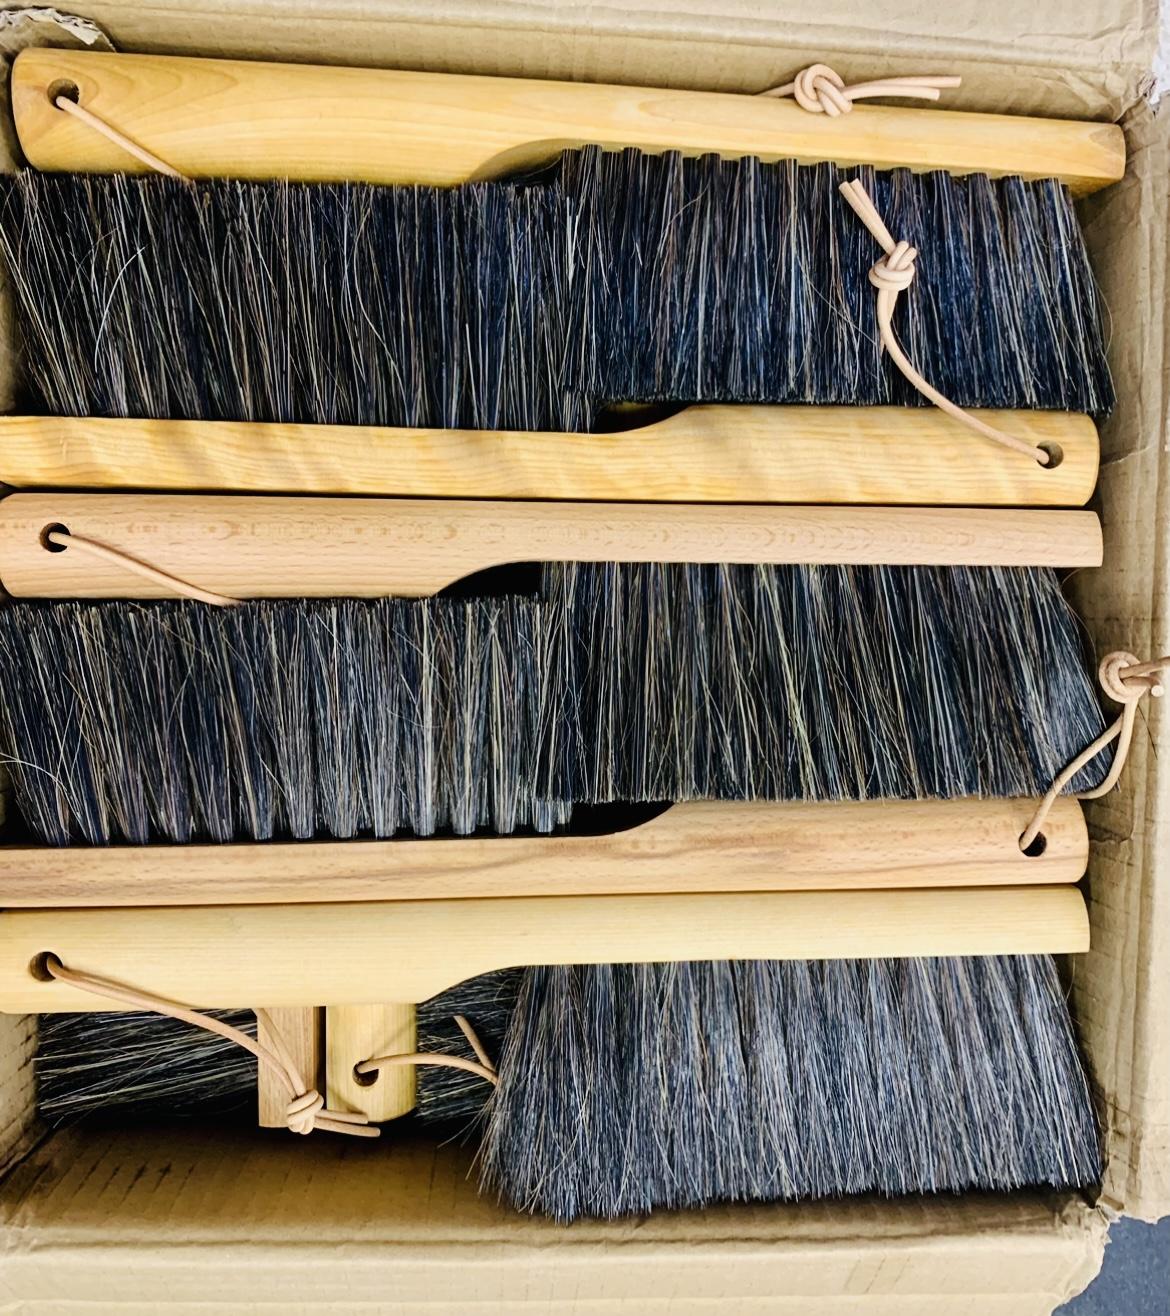 Counter Duster for Fine Dusting – 5 x 15 Row Horse Hair Bristle Plastic  Handle M550030 - Gordon Brush